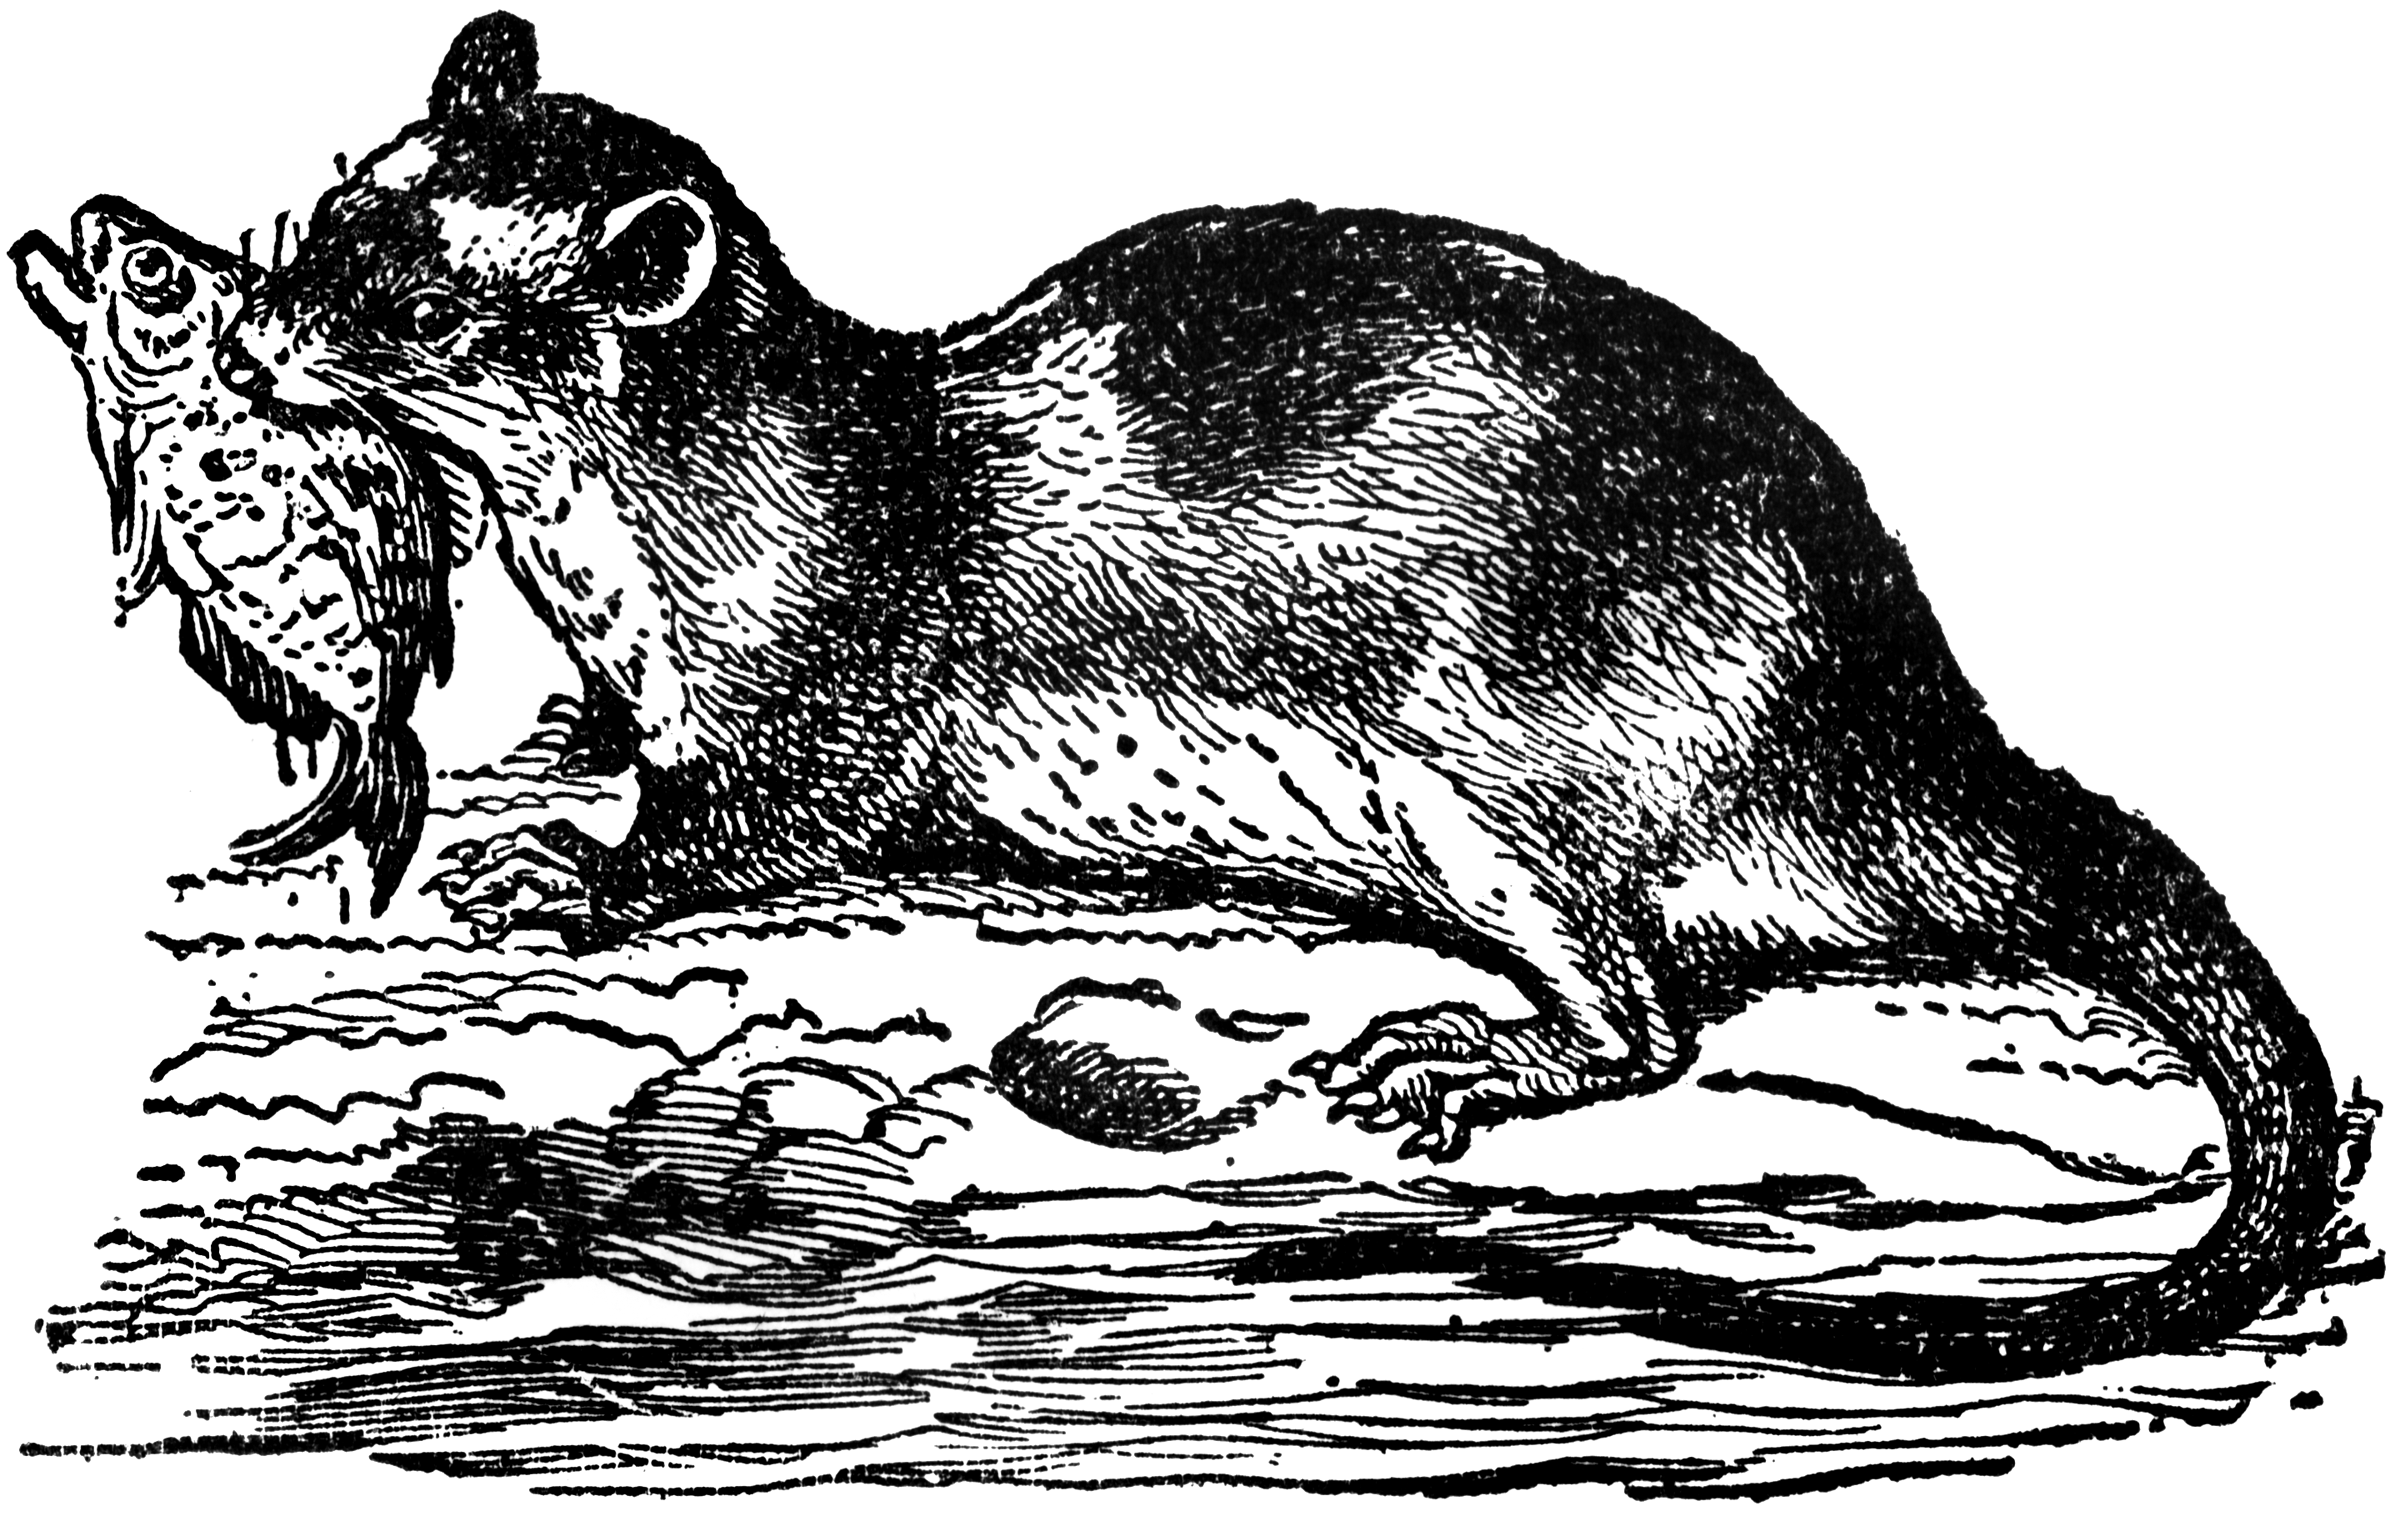 A Description of the Marsupials Which are Pouched Mammals